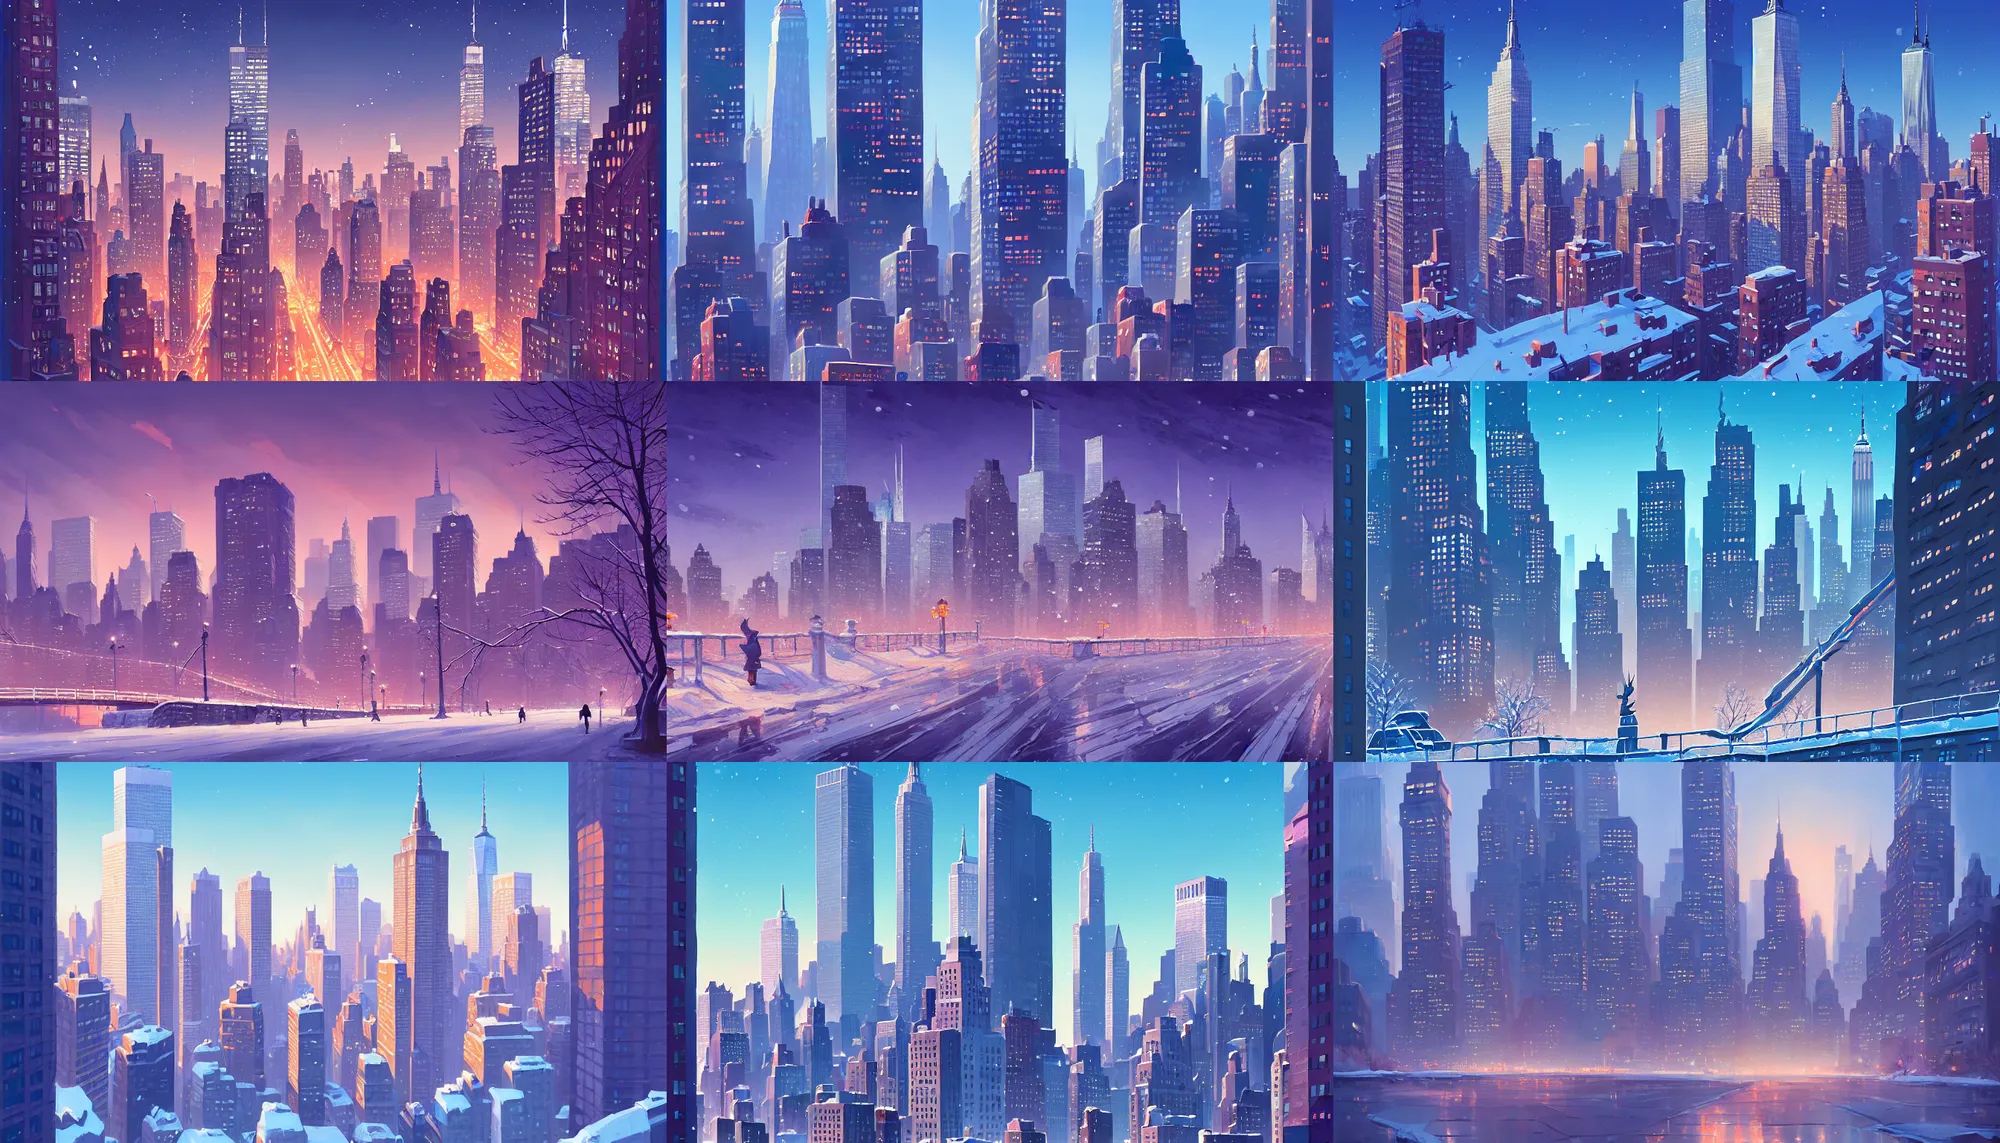 Prompt: new - york skyline in winter, behance hd by jesper ejsing, by rhads, makoto shinkai and lois van baarle, ilya kuvshinov, rossdraws global illumination